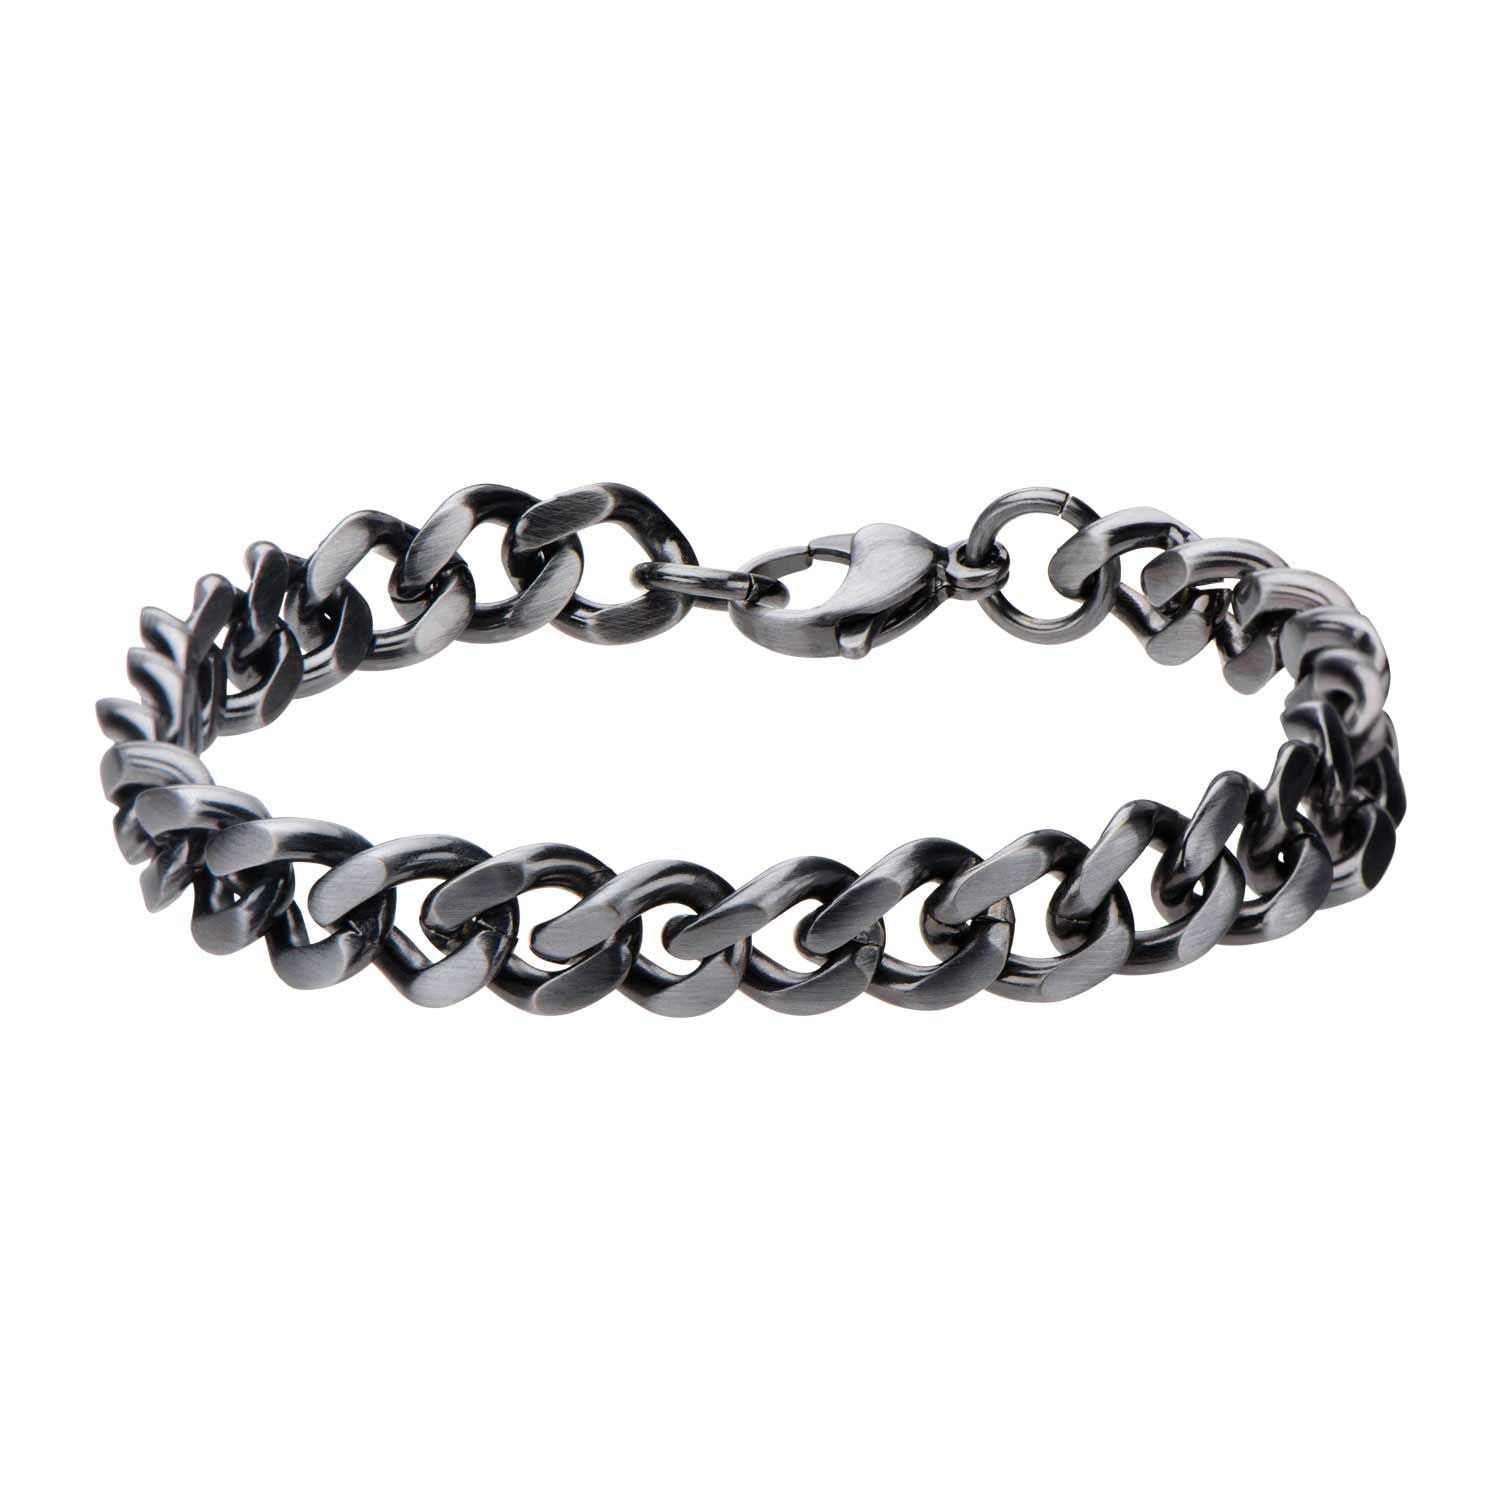 INOX Mens Stainless Steel Motor Chain Bracelet 8.5 inch Long